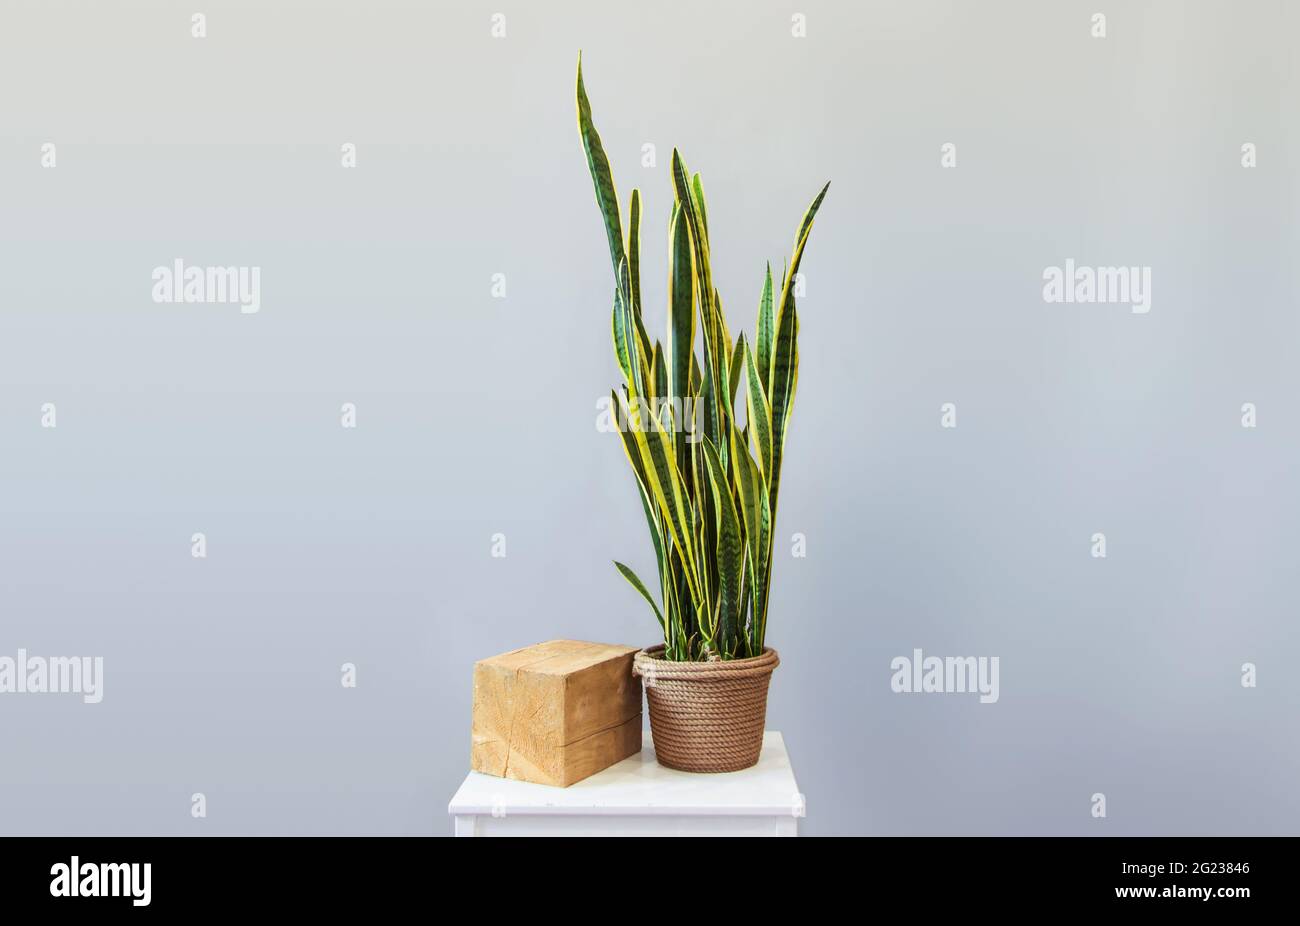 Potted plant sansevieria on a gray background home decor copy space Kinfolk style decoration Stock Photo